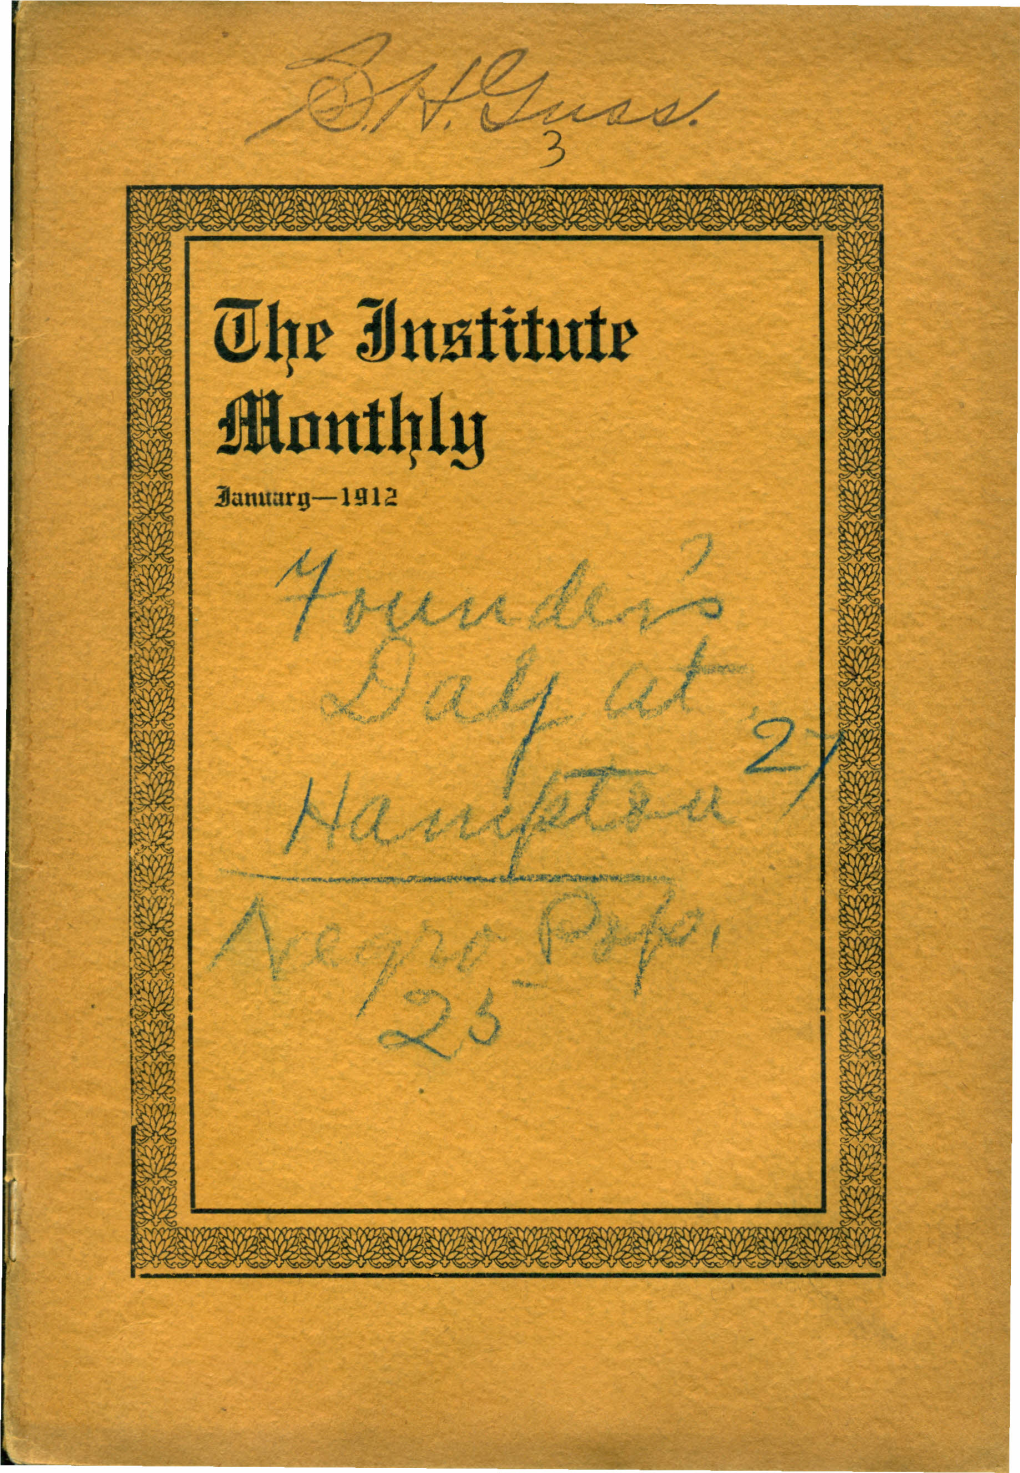 January 1912